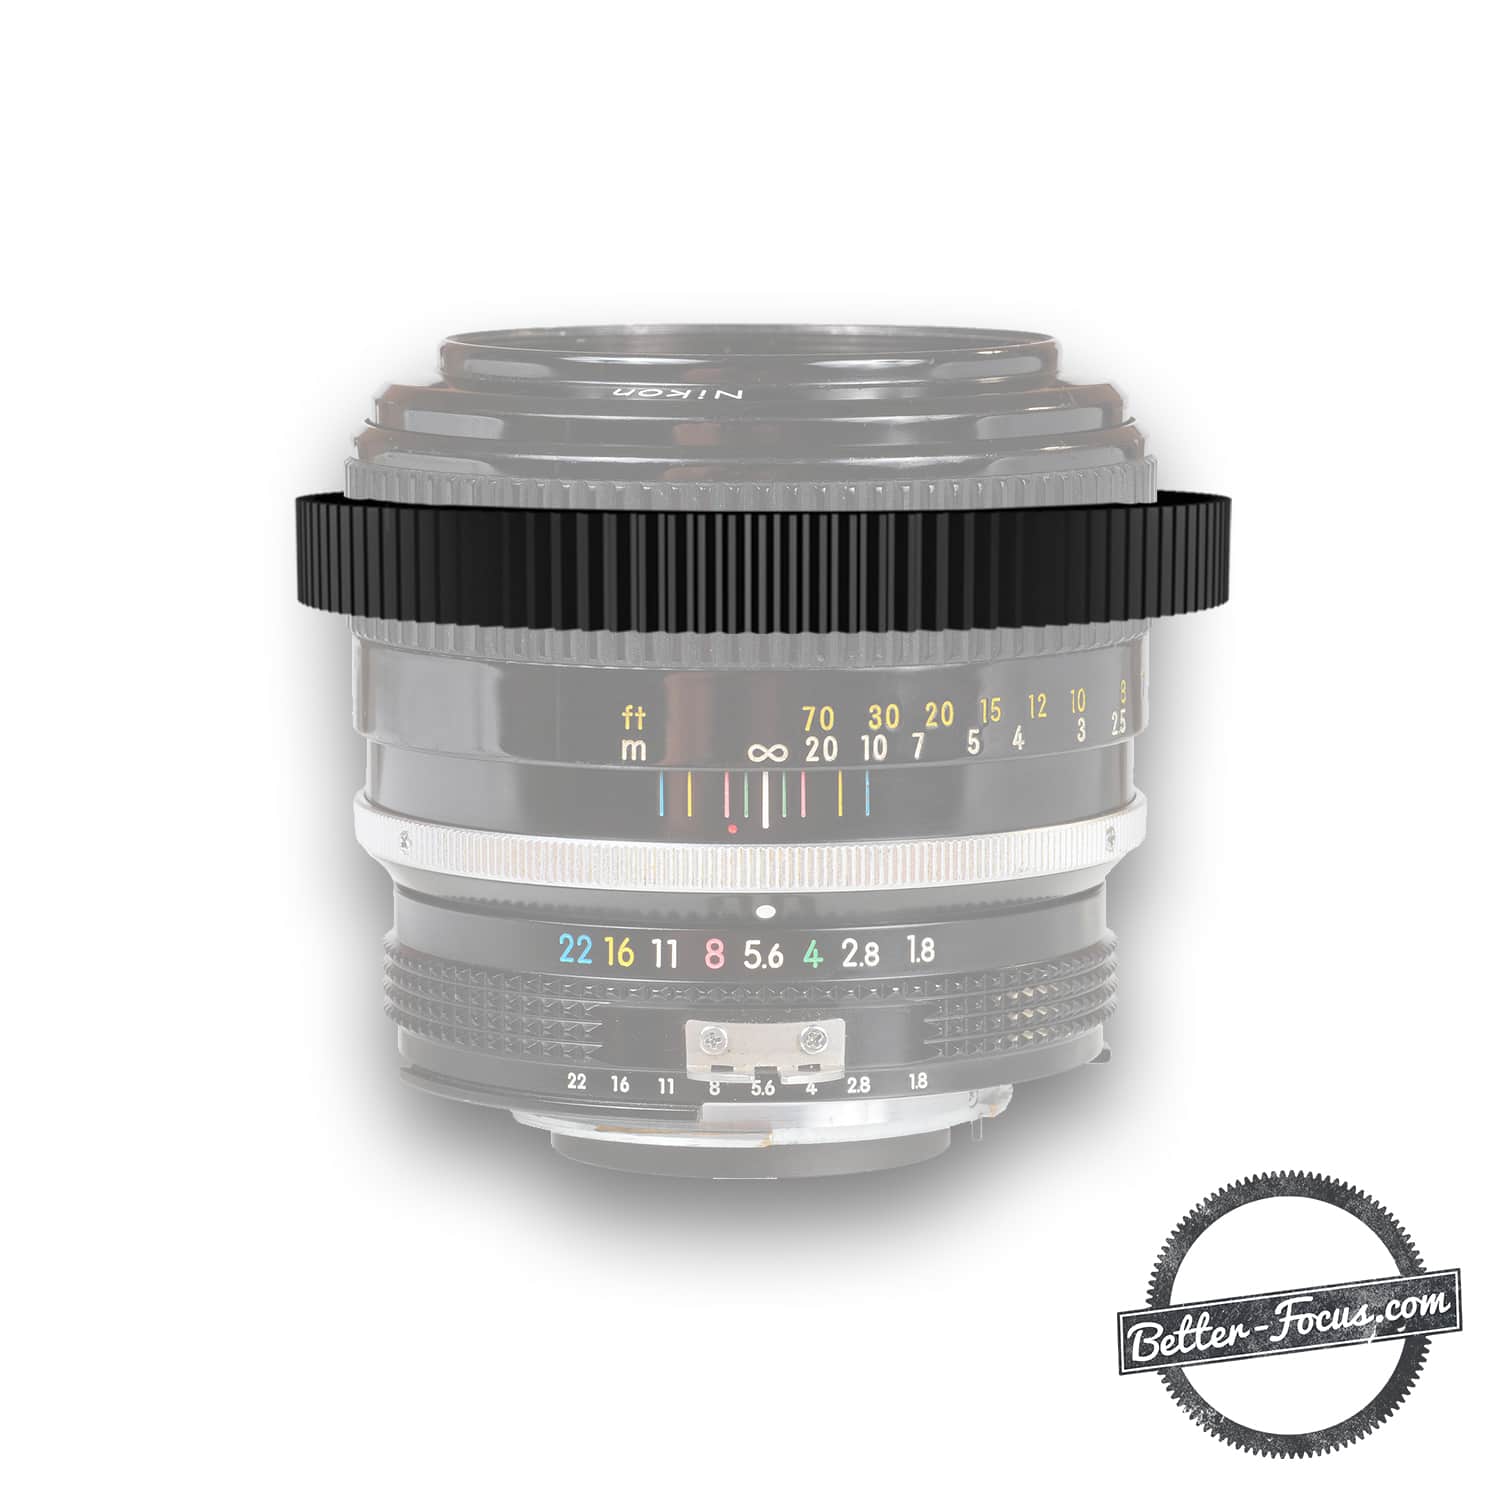 Slapen Kan niet lijn Perfect fitting Follow Focus Gear for NIKON 85MM F1.8 PRE AI (TYPE K) (W  RUBBER FOCUS RING) lens